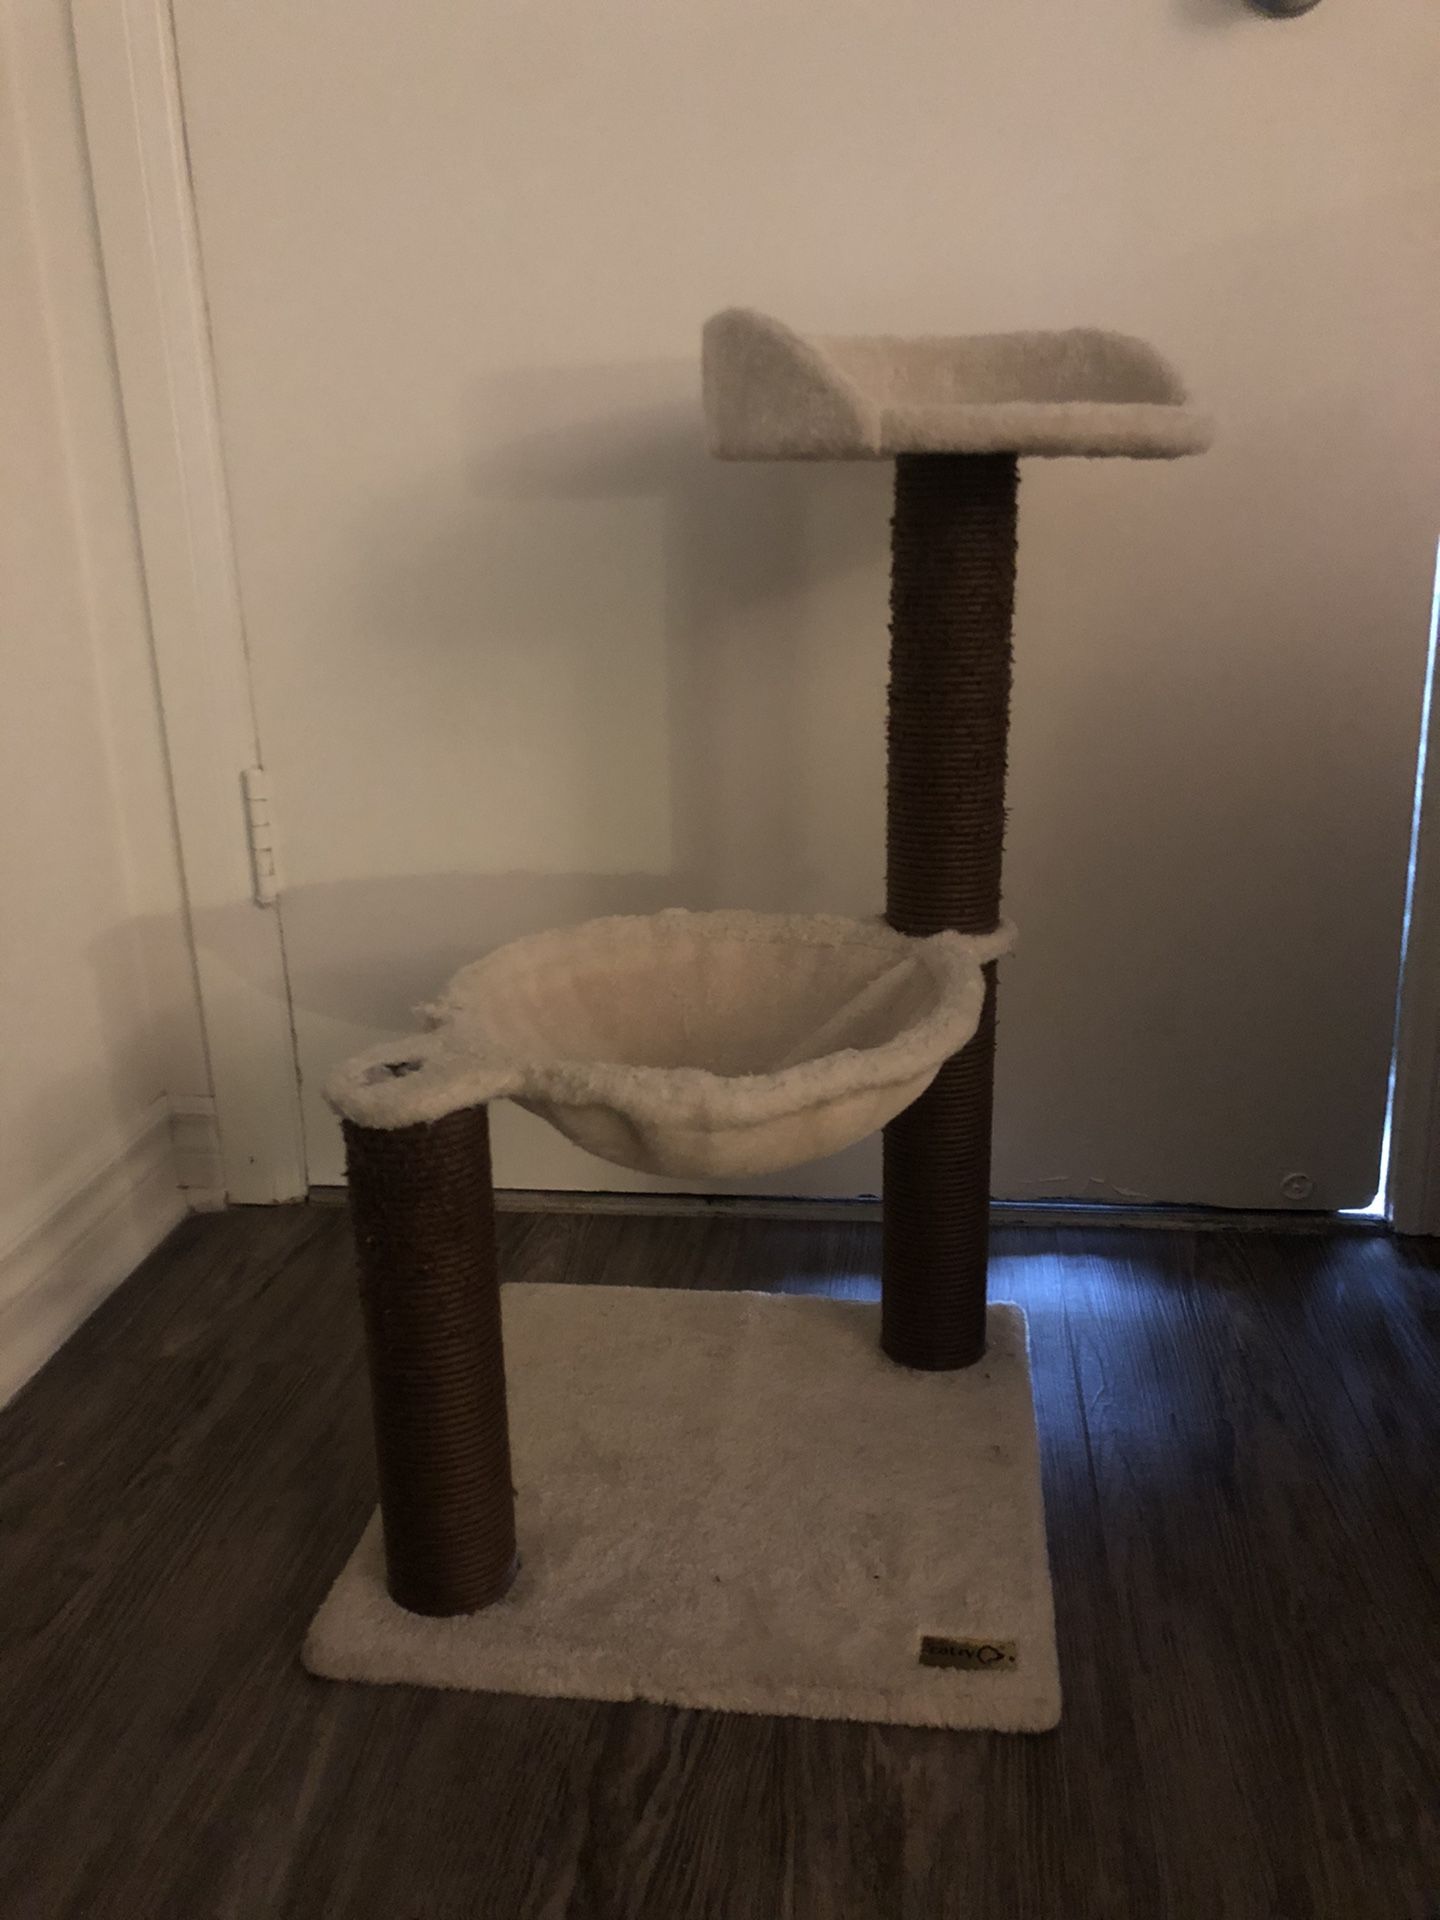 Cat stand